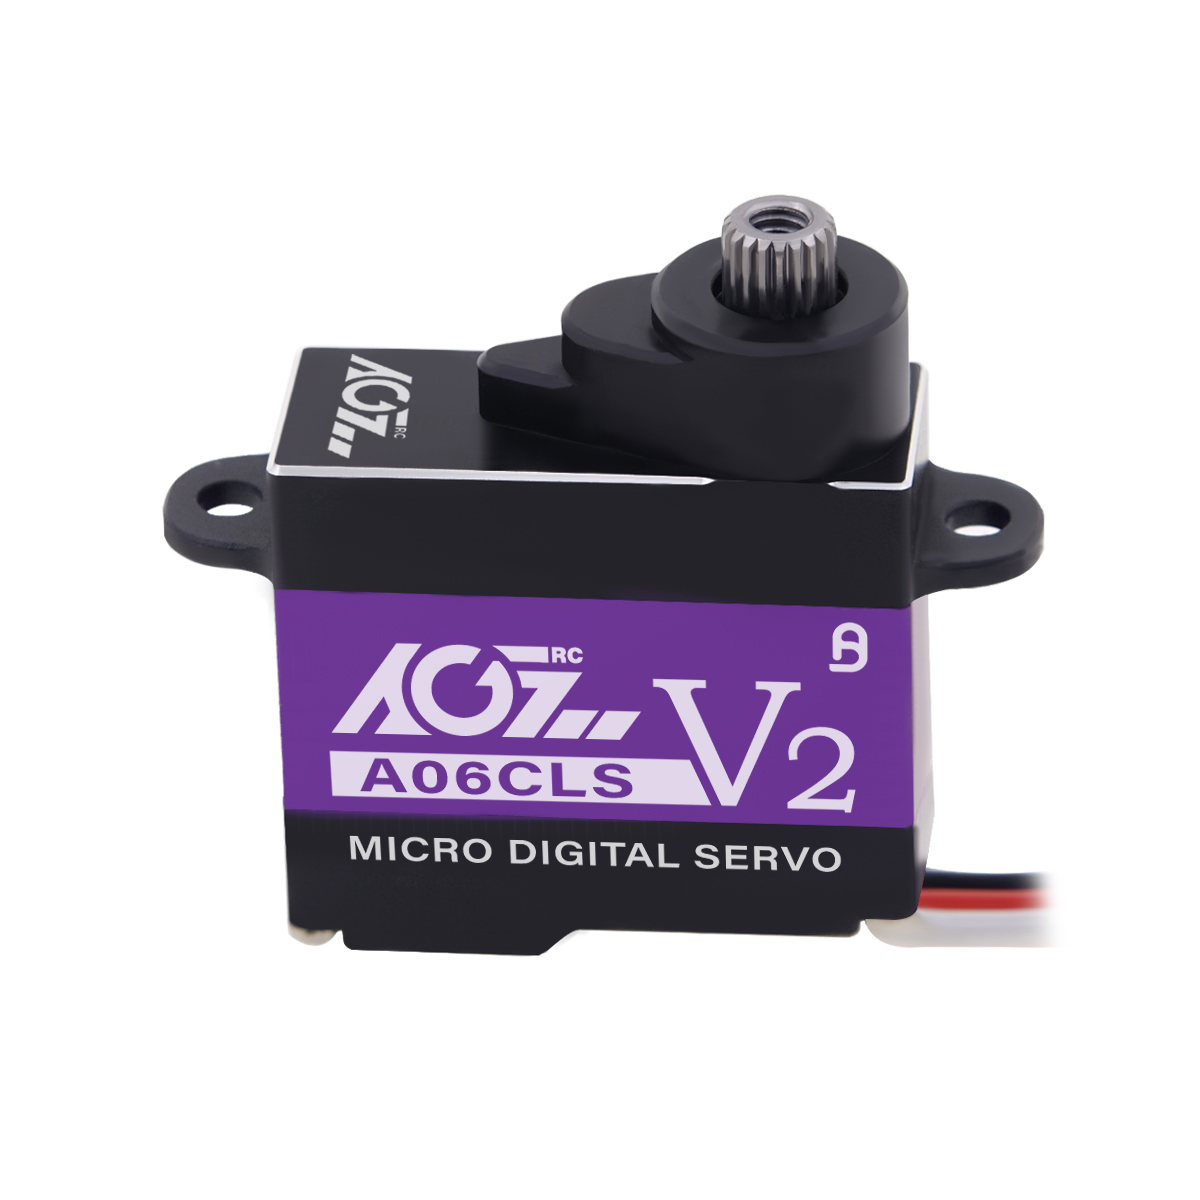 AGF-RC A06CLS V2 Micro Coreless Titanium Servo (Purple)